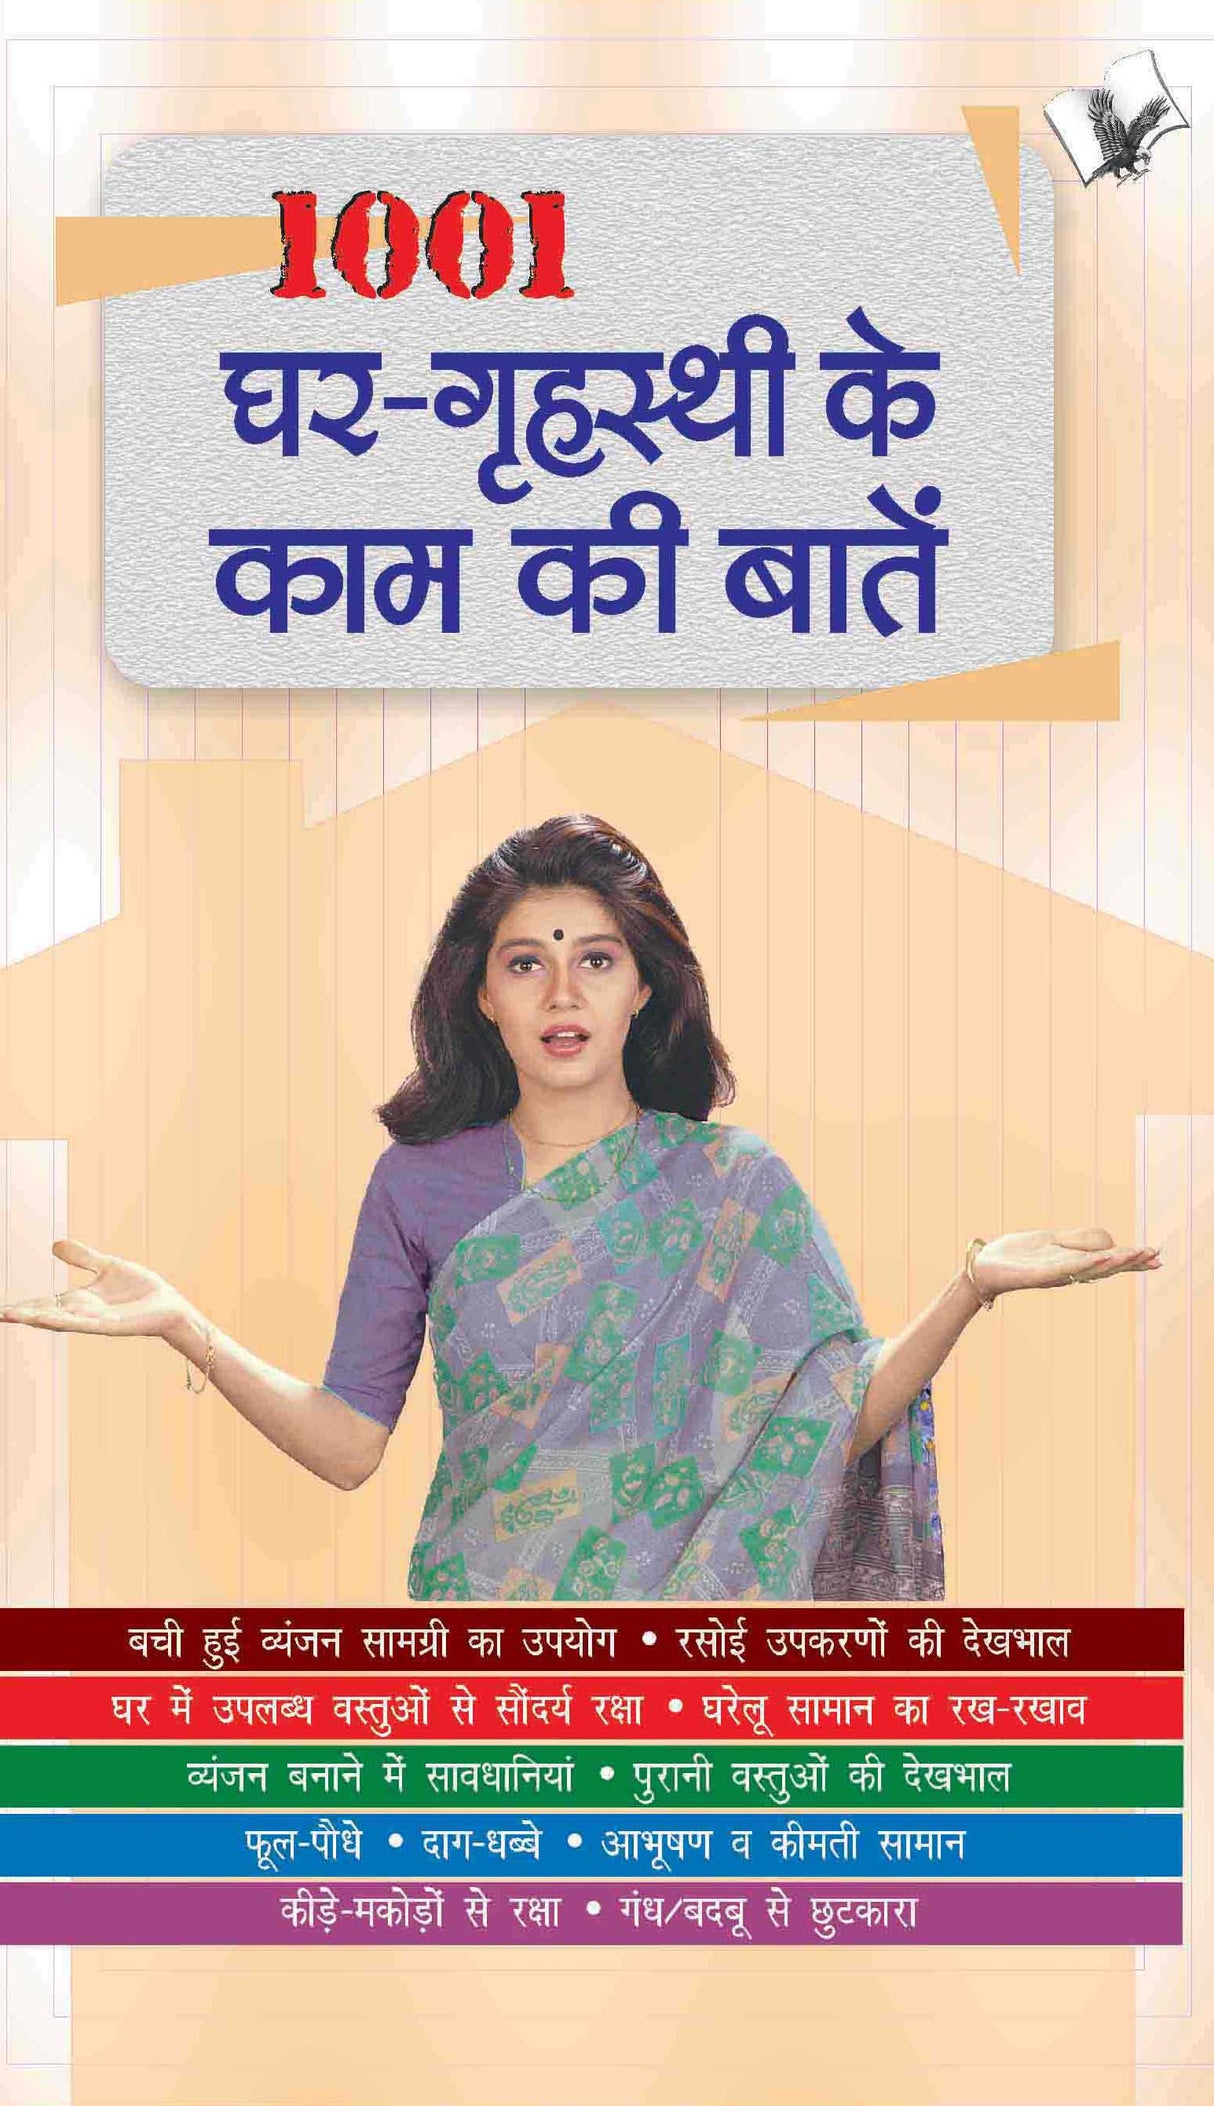 1001 Ghar - Grihasti Ki Kaam Ki Baatein: Ways to keep your house sparkling clean - kitchen, health, hygine, clothes and jewellary... In Hindi